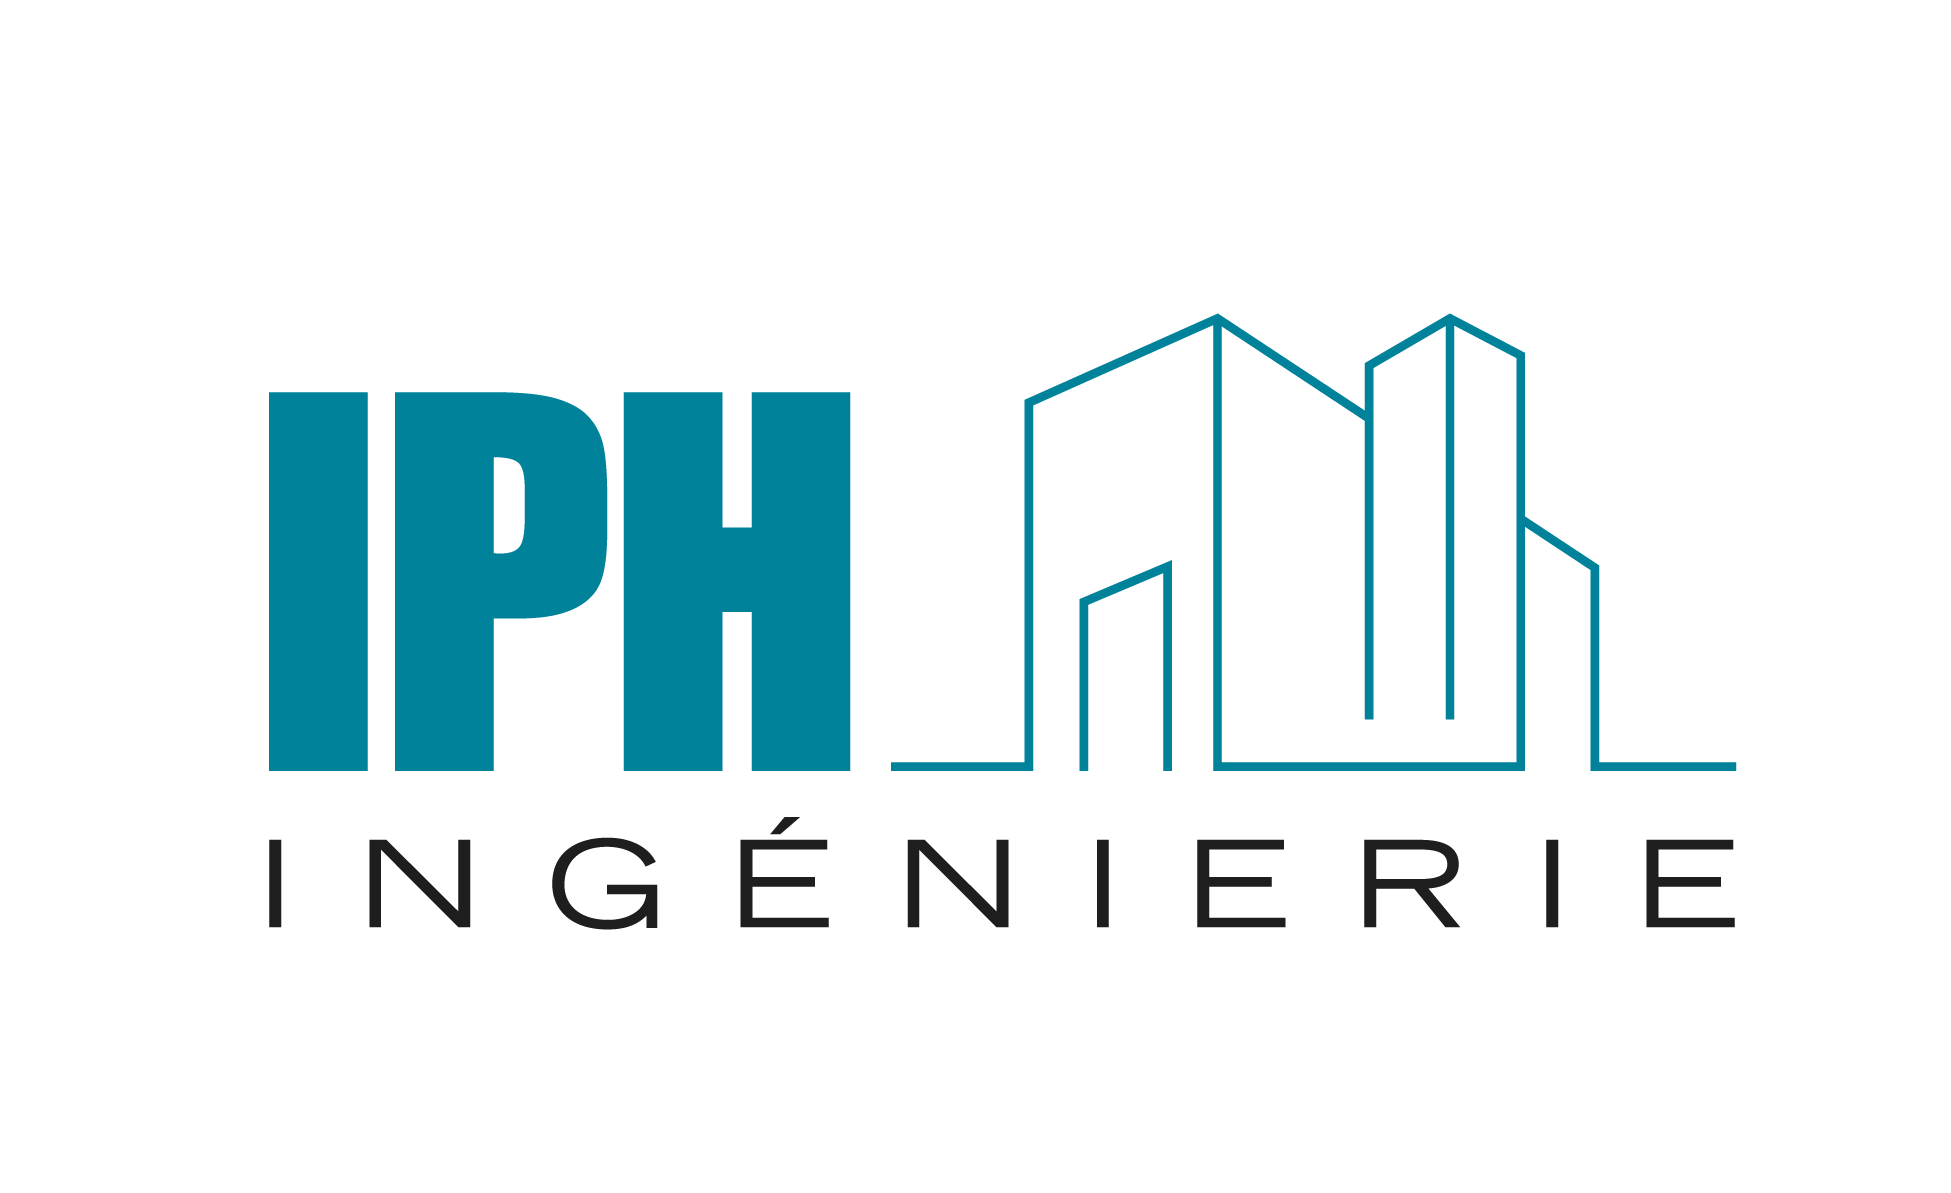 IPH Ingénierie